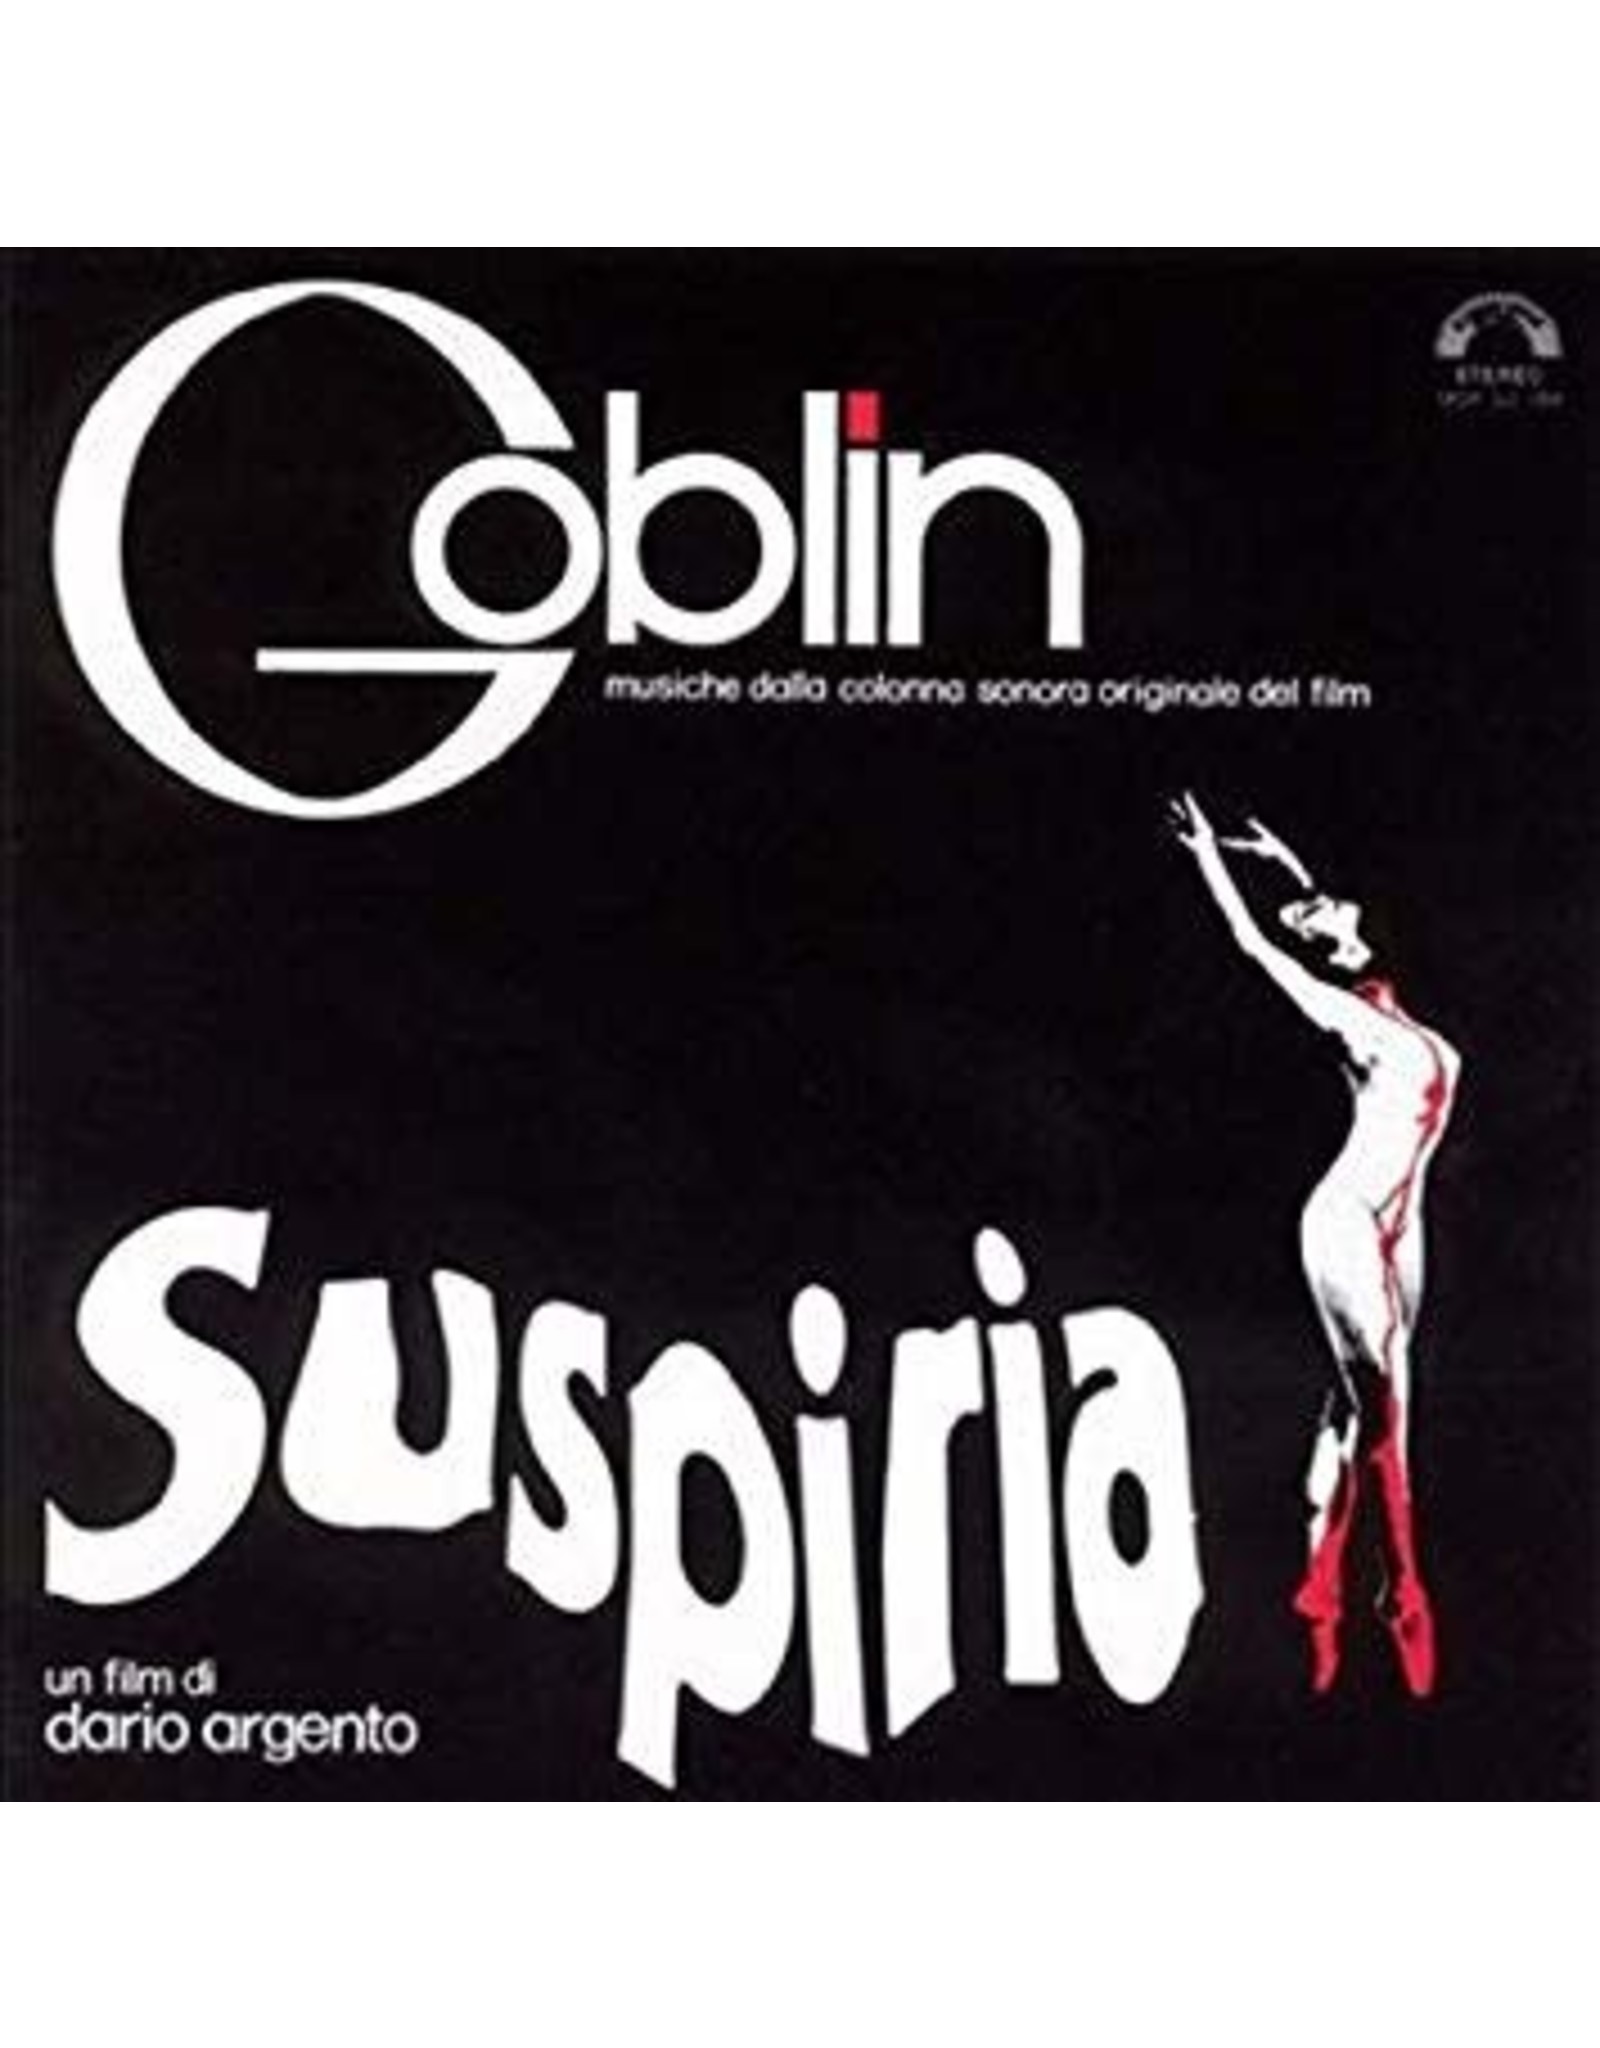 Goblin - Suspiria (Music From The Film)